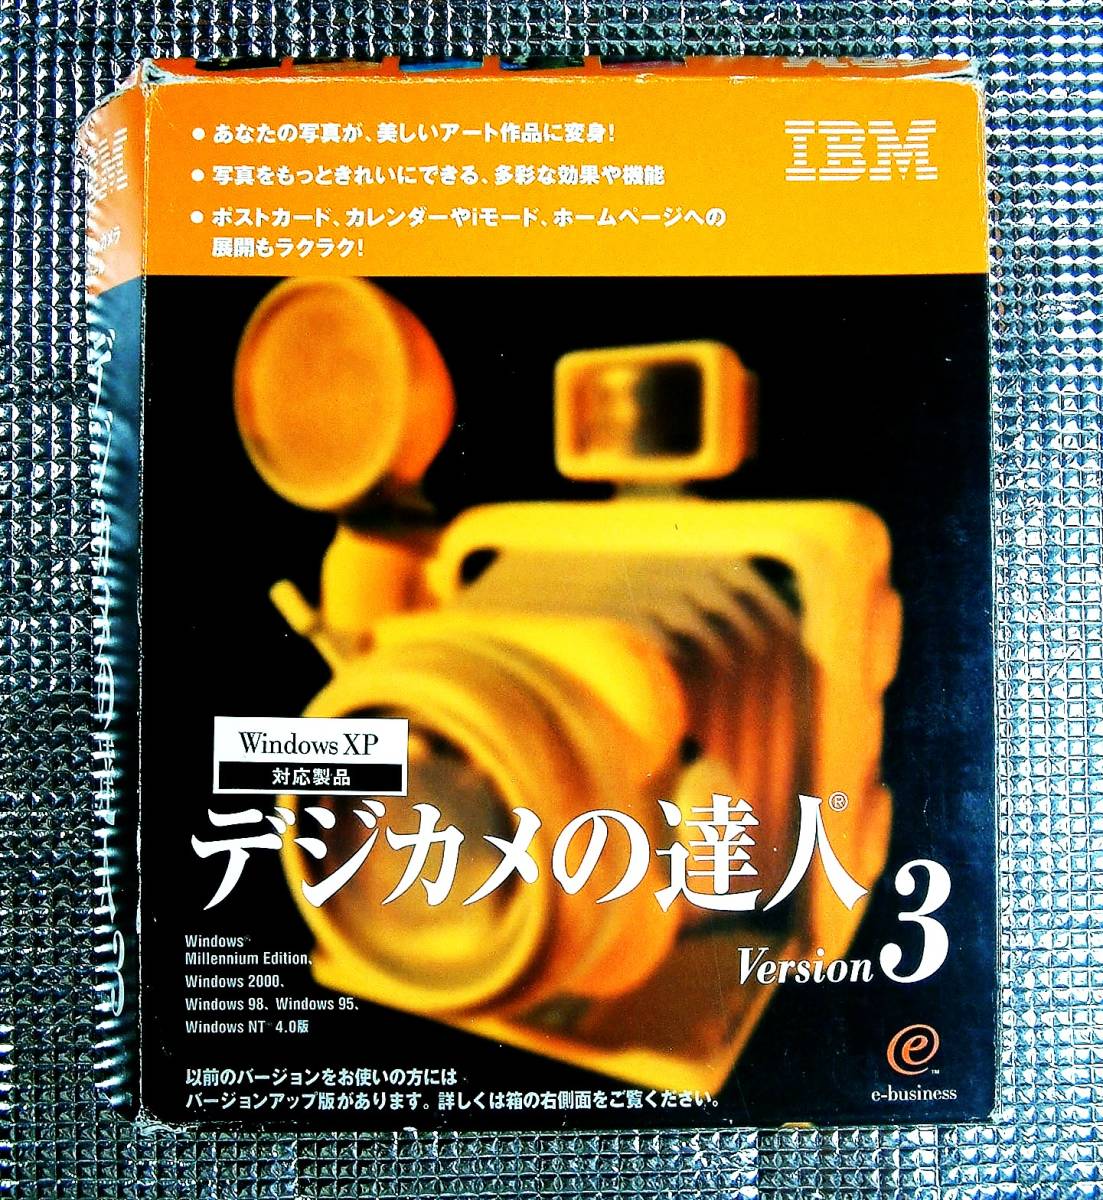 【4155】IBM デジカメの達人3 (画像,イメージ,写真)の(編集,加工,修整,整理,管理)ソフト (写真集,カレンダー,ポストカード,ポスター)作成